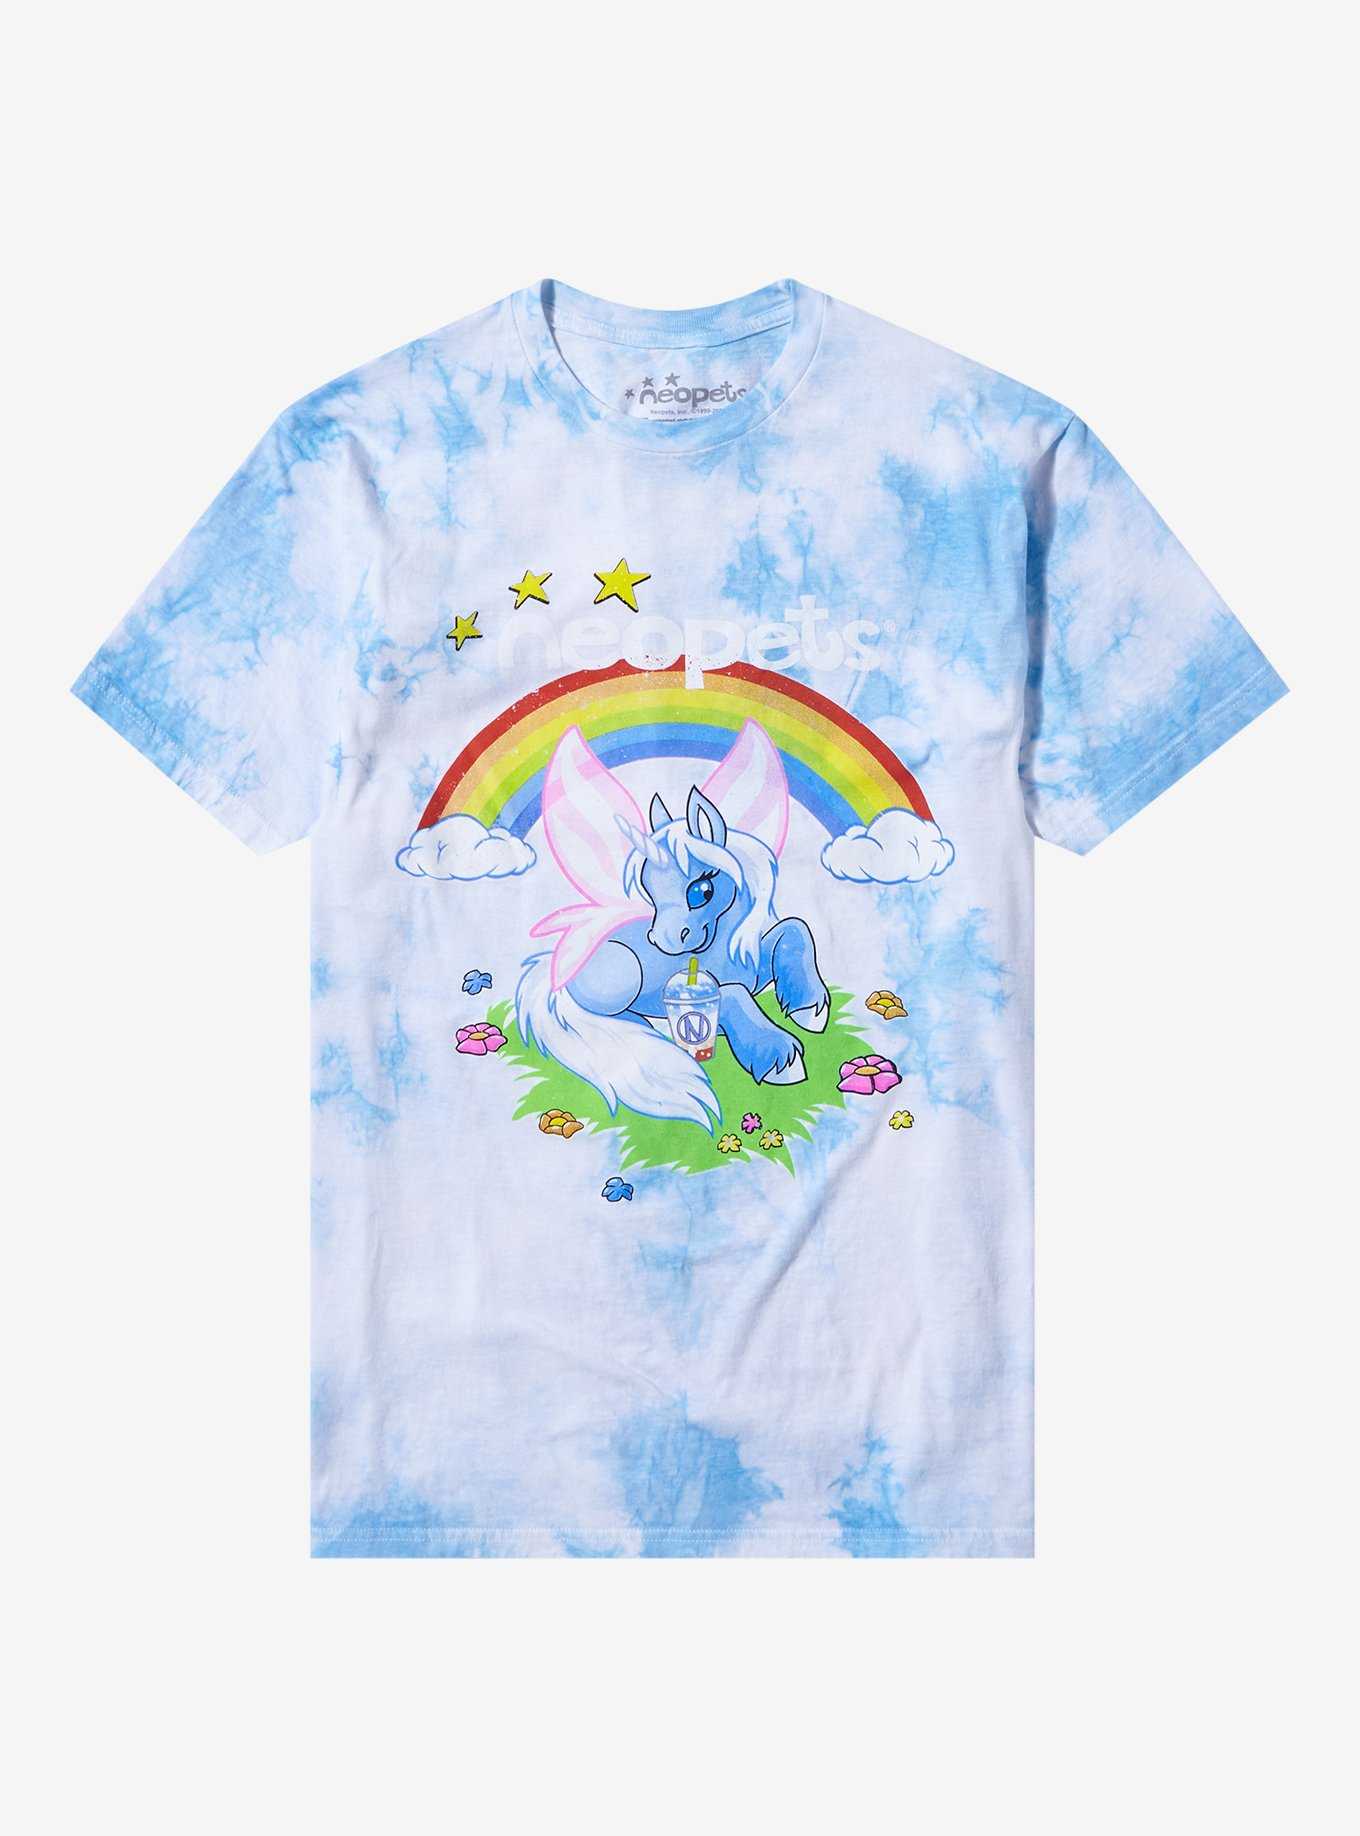 Neopets Uni Rainbow Wash Boyfriend Fit Girls T-Shirt, , hi-res